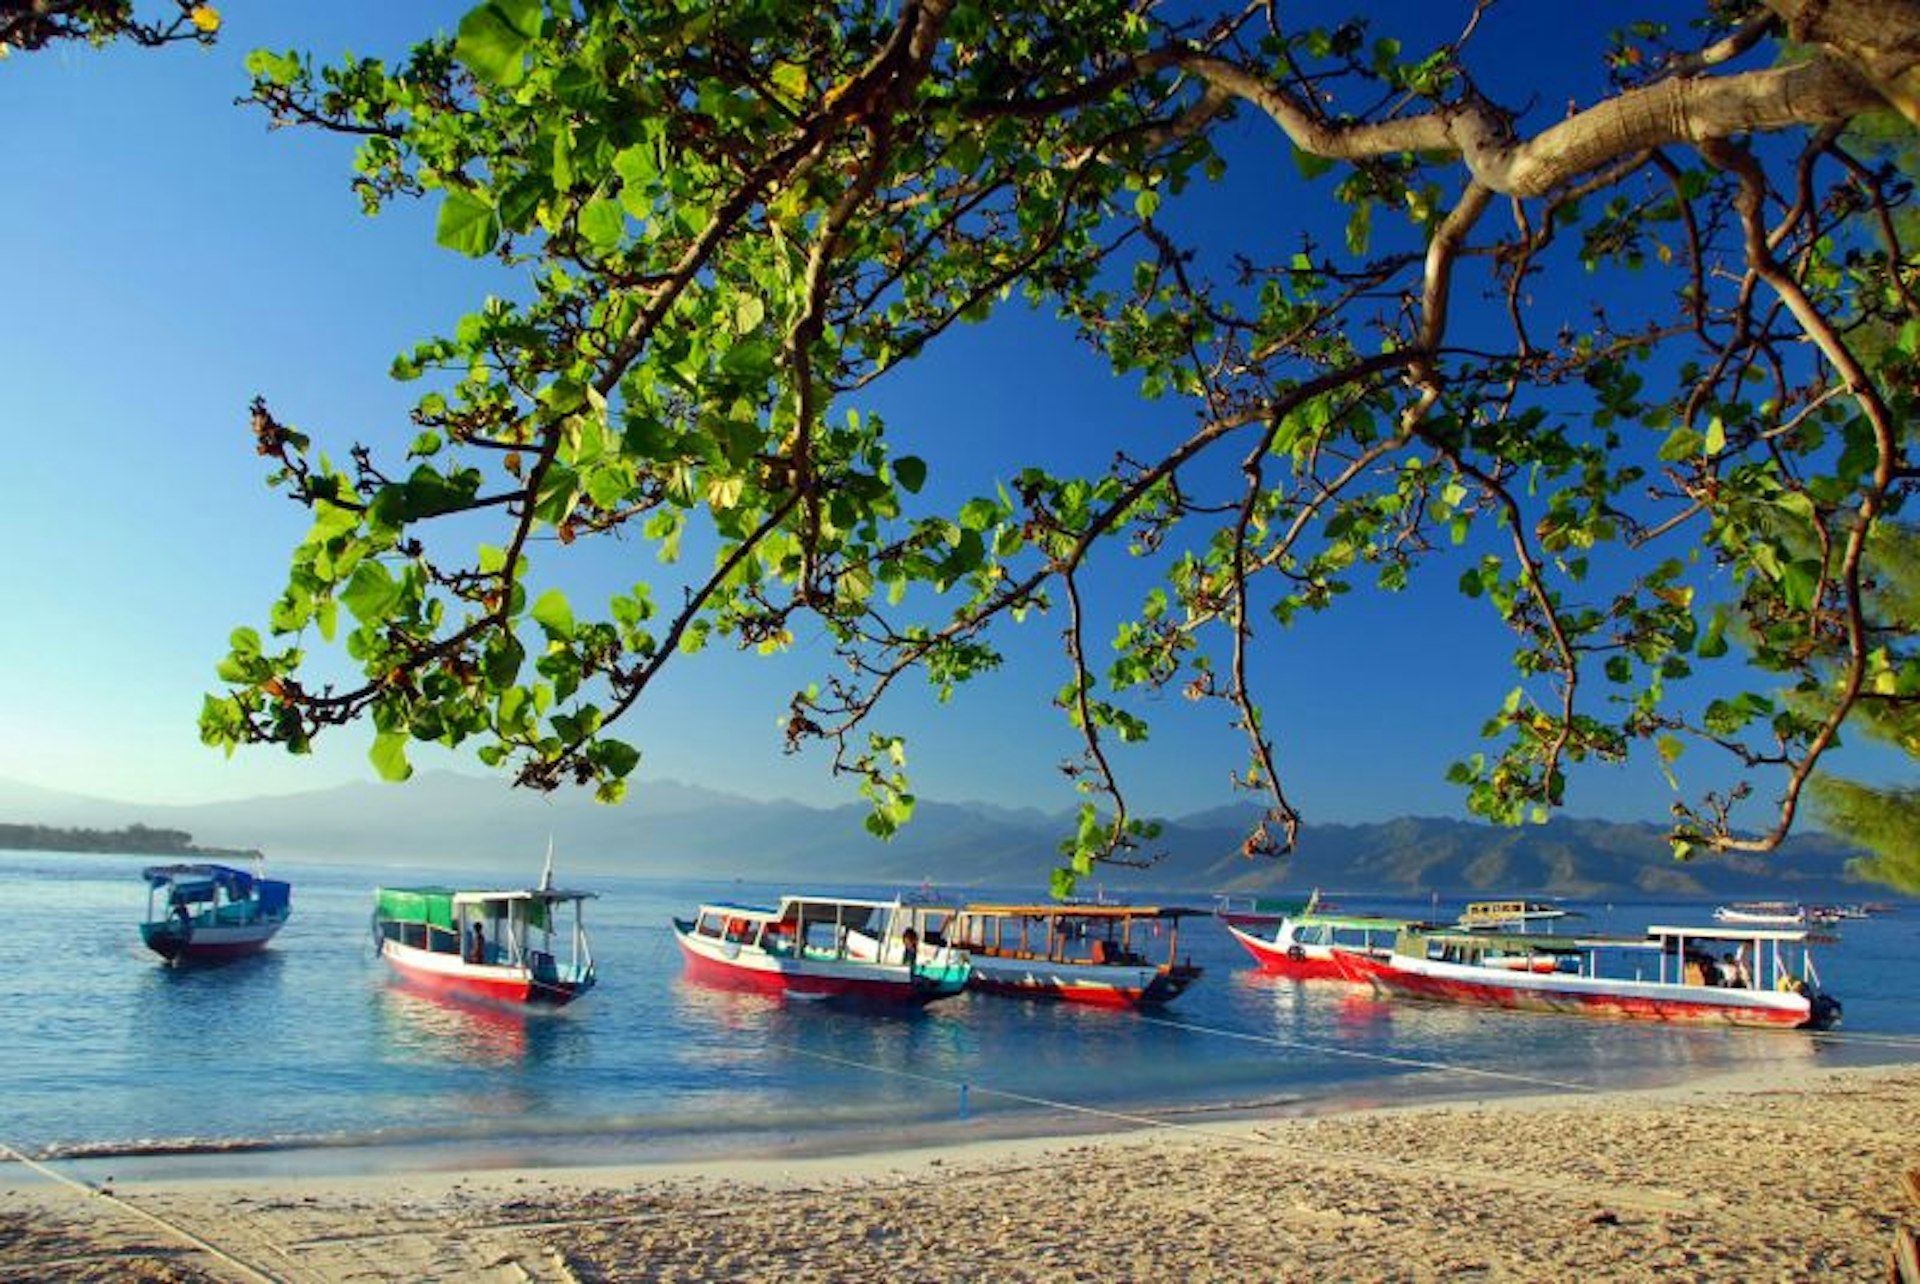 Boats moored at a still beach in Gili Trawangan in Indonesia